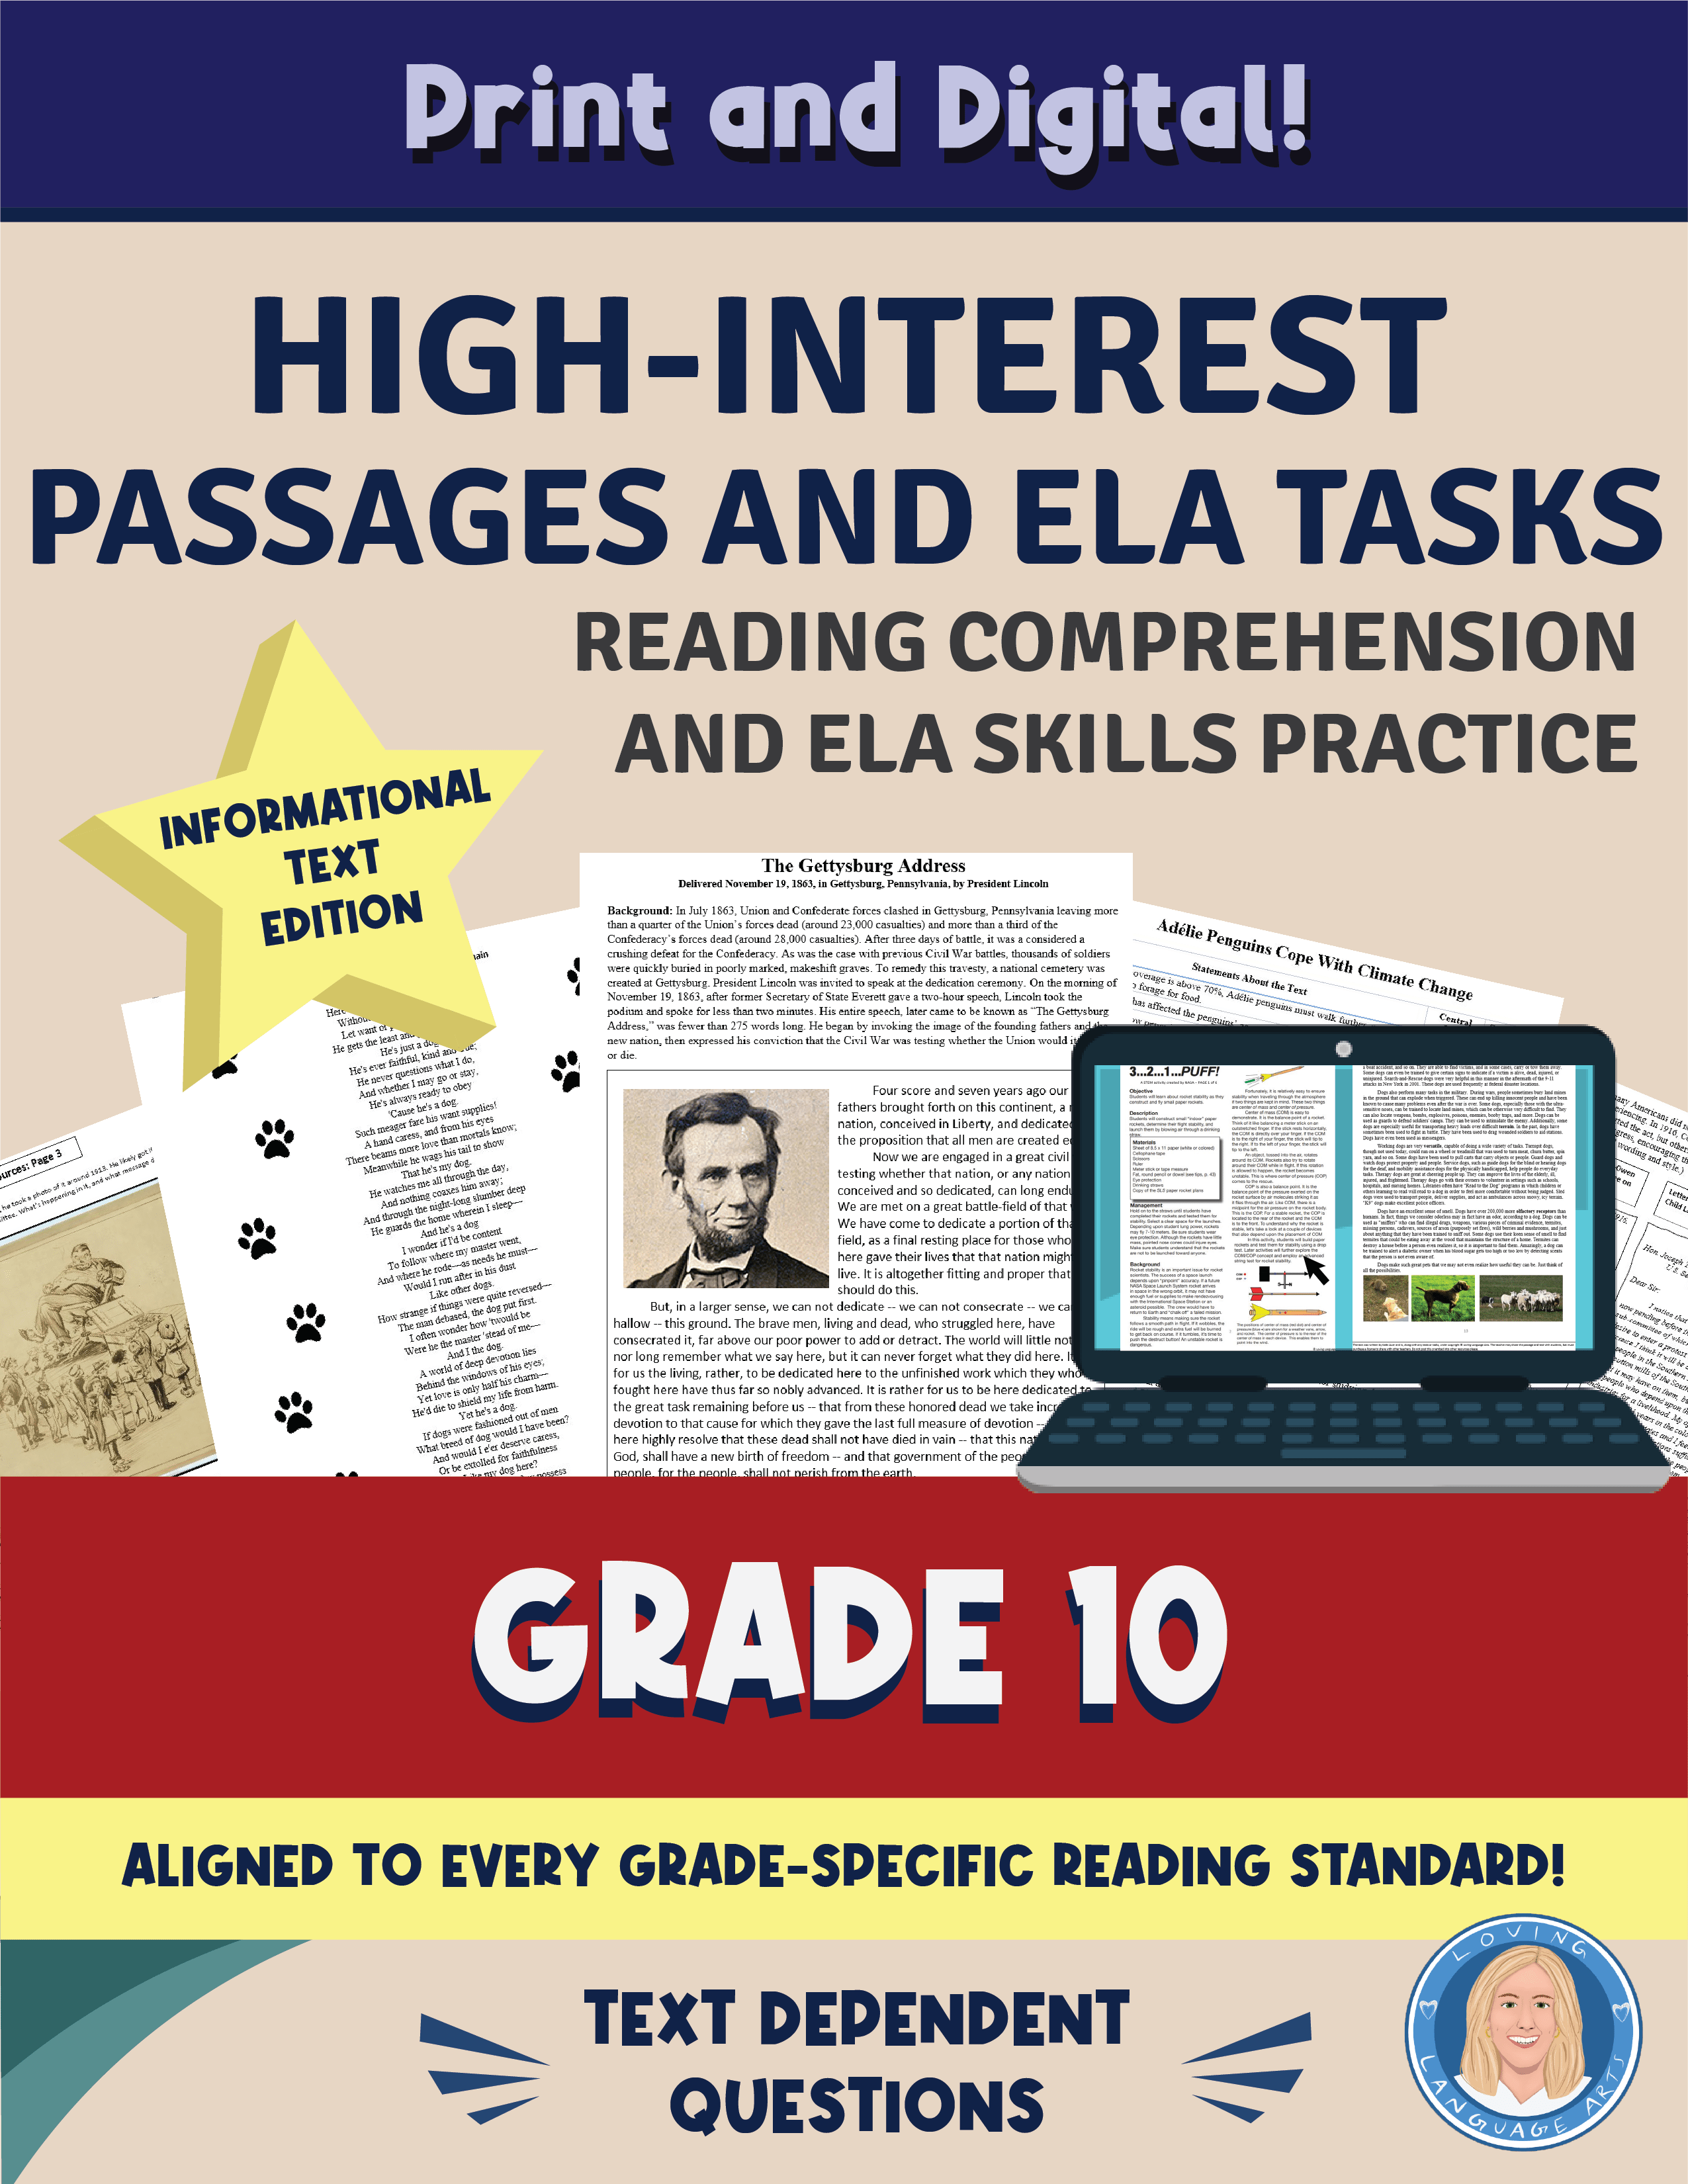 10th grade language arts workbook - High-interest passages and tasks.